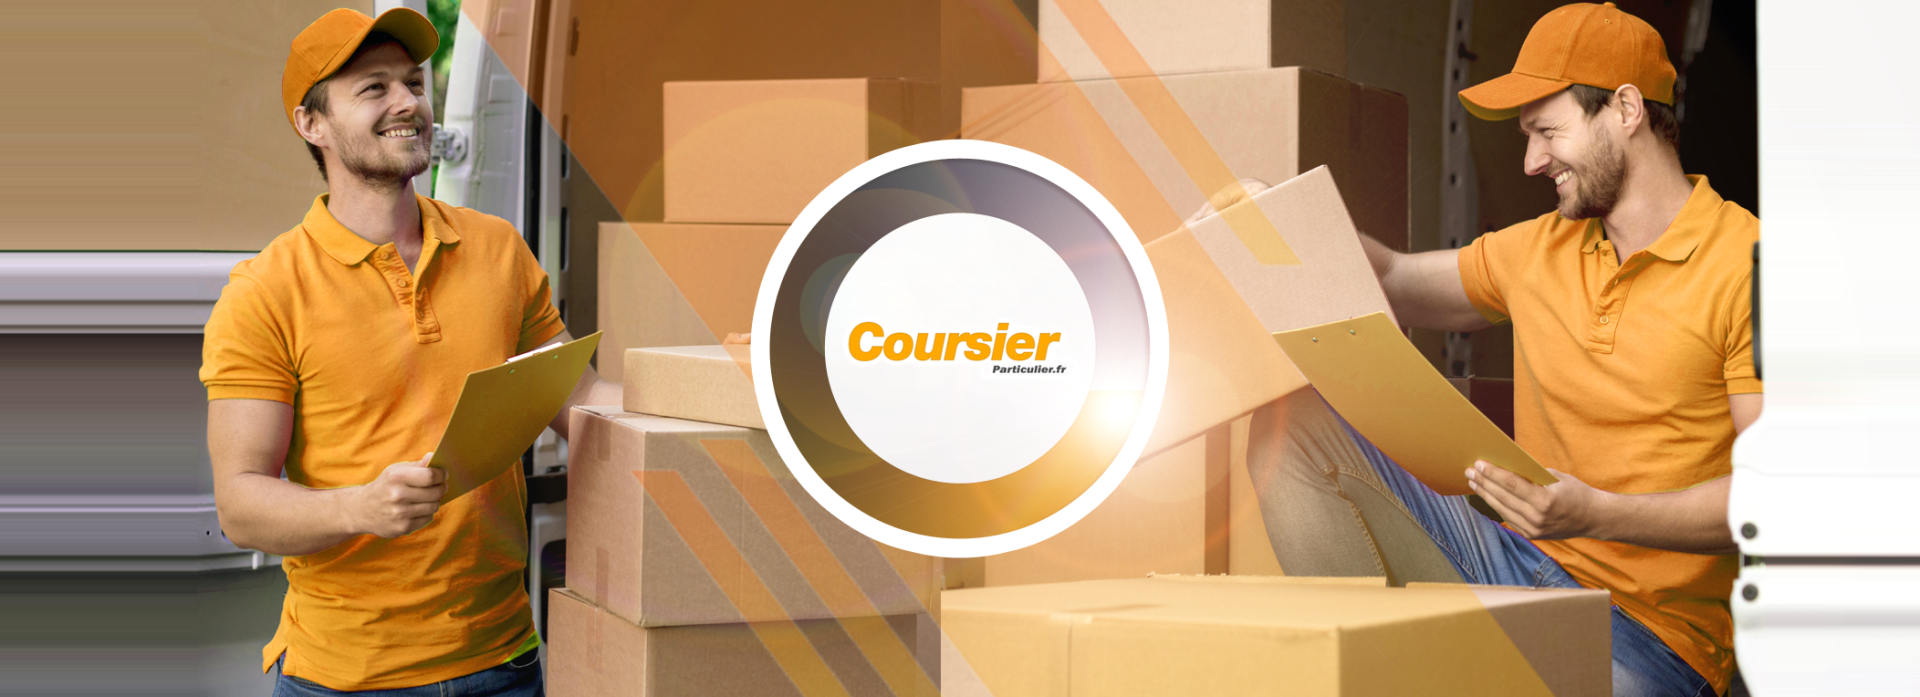 Coursier  e-commerce